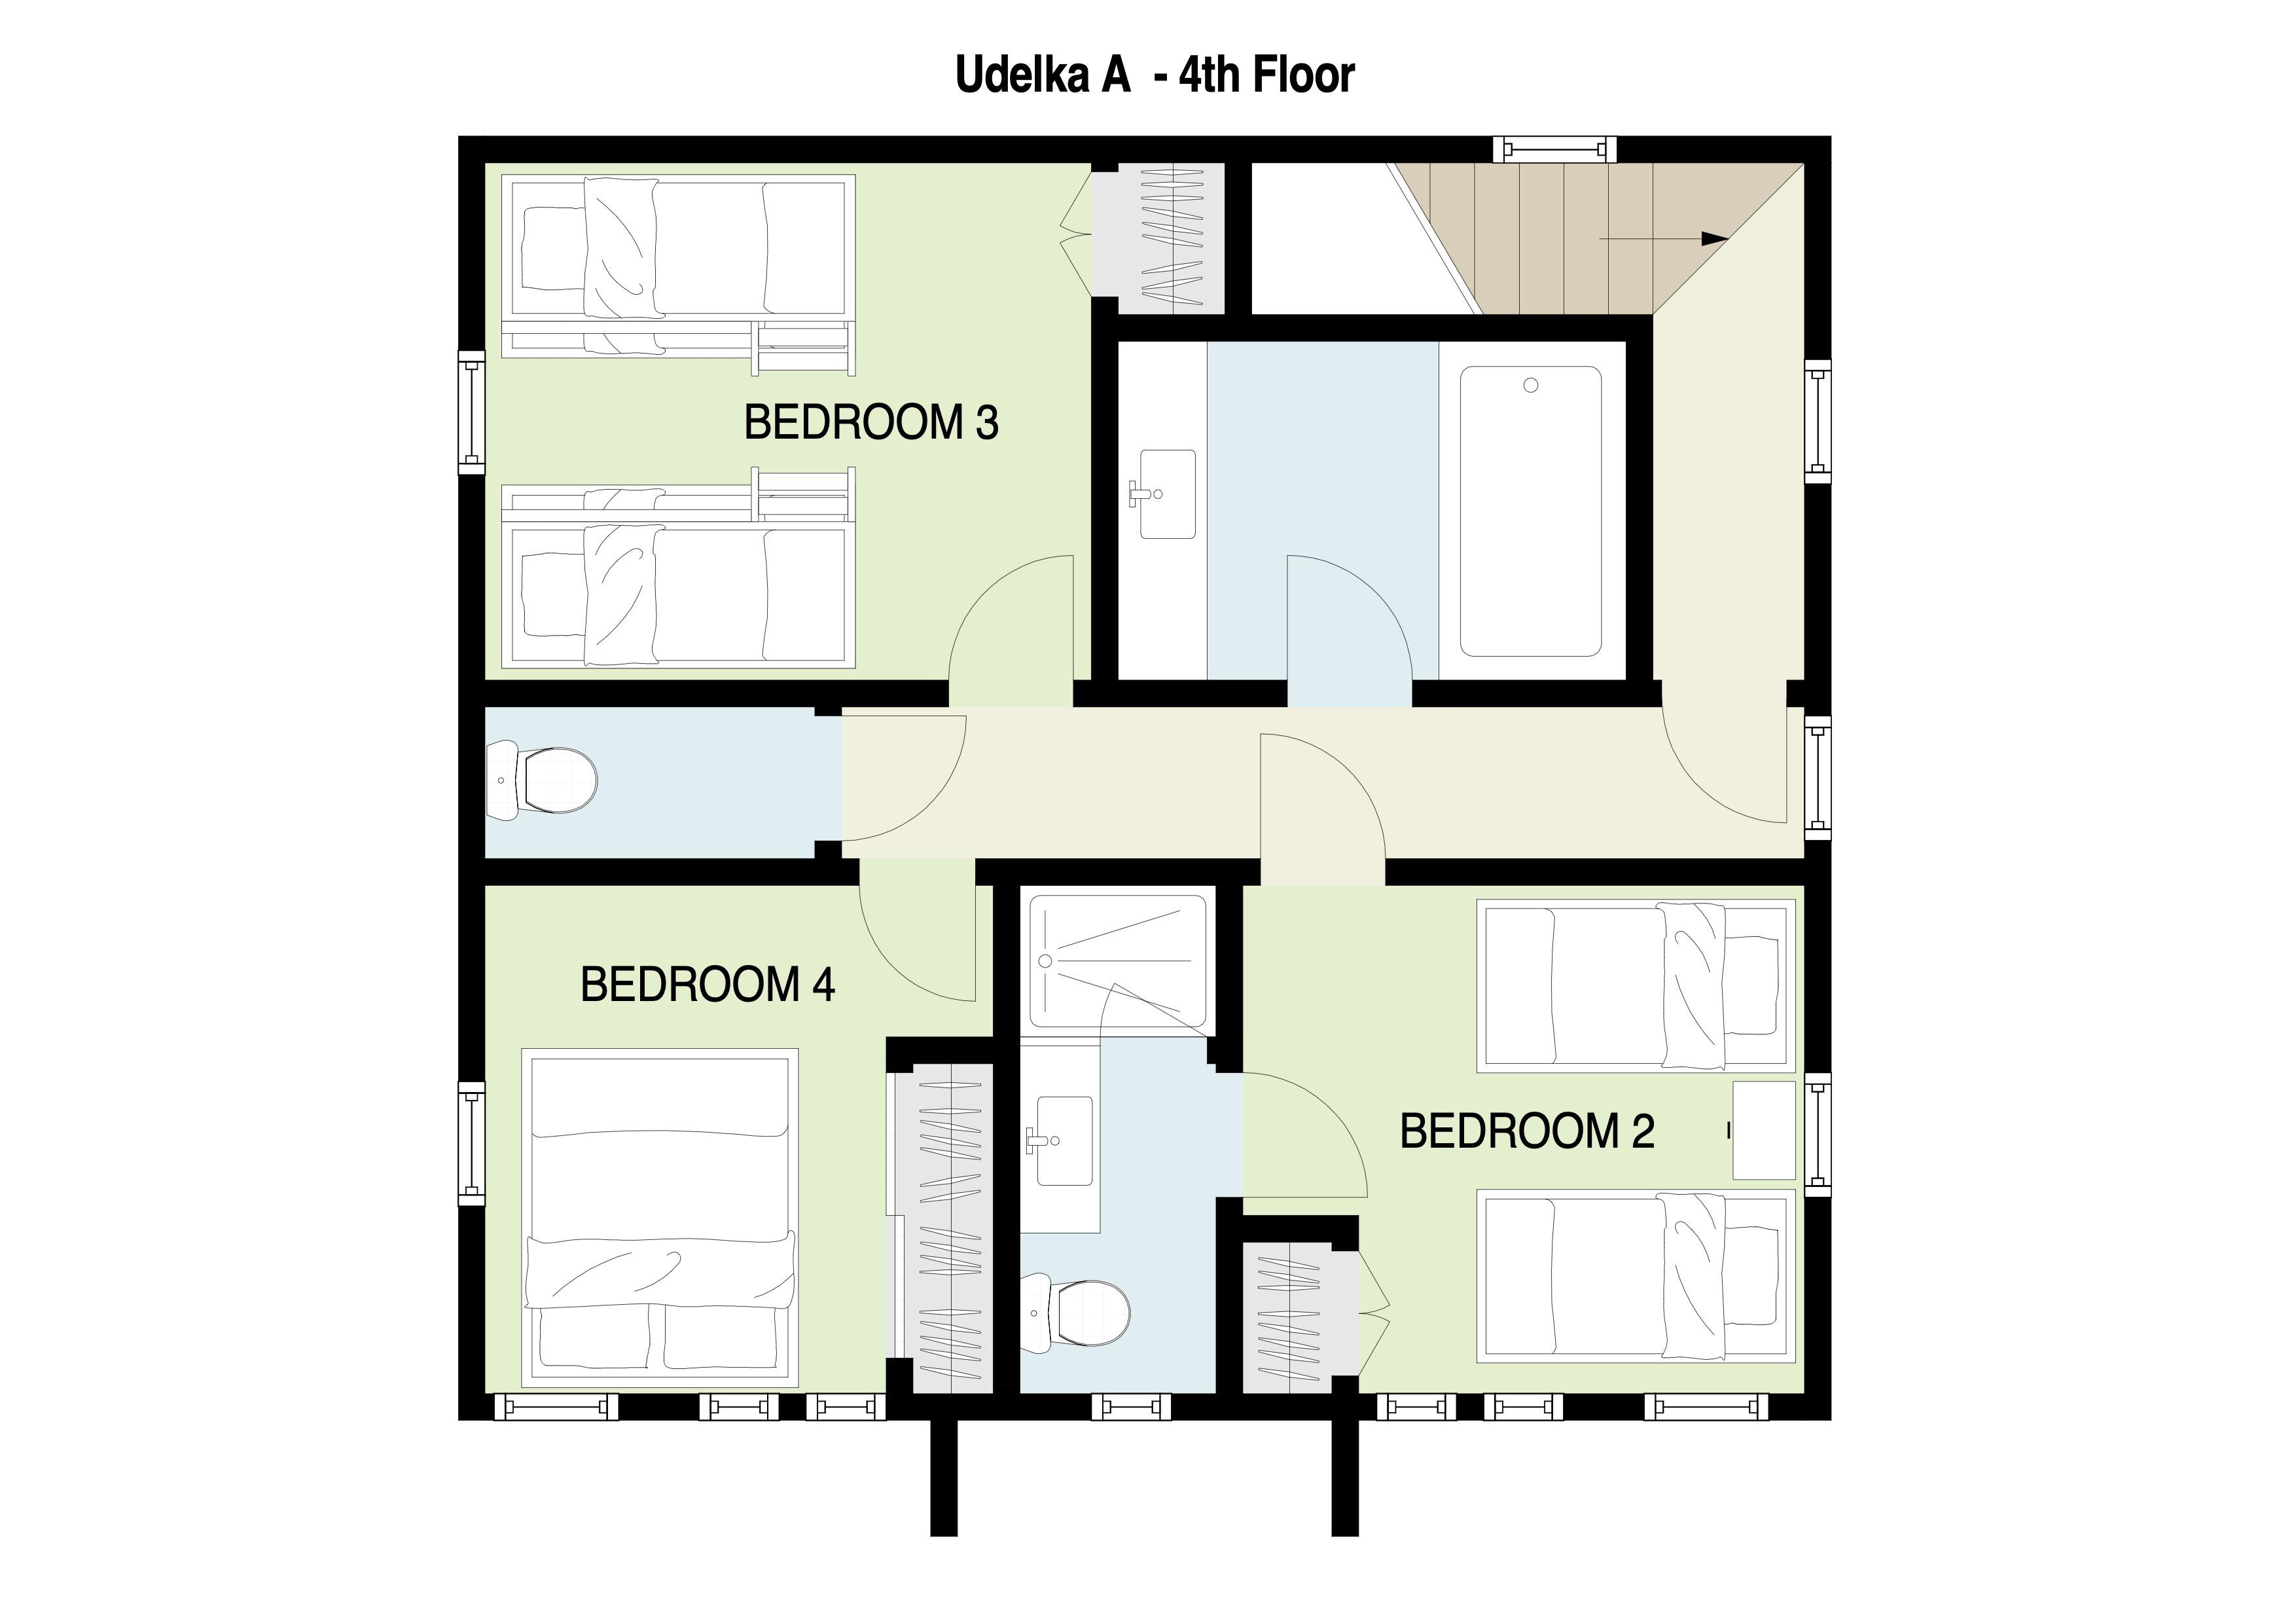 Udelka A  4th Floor plans